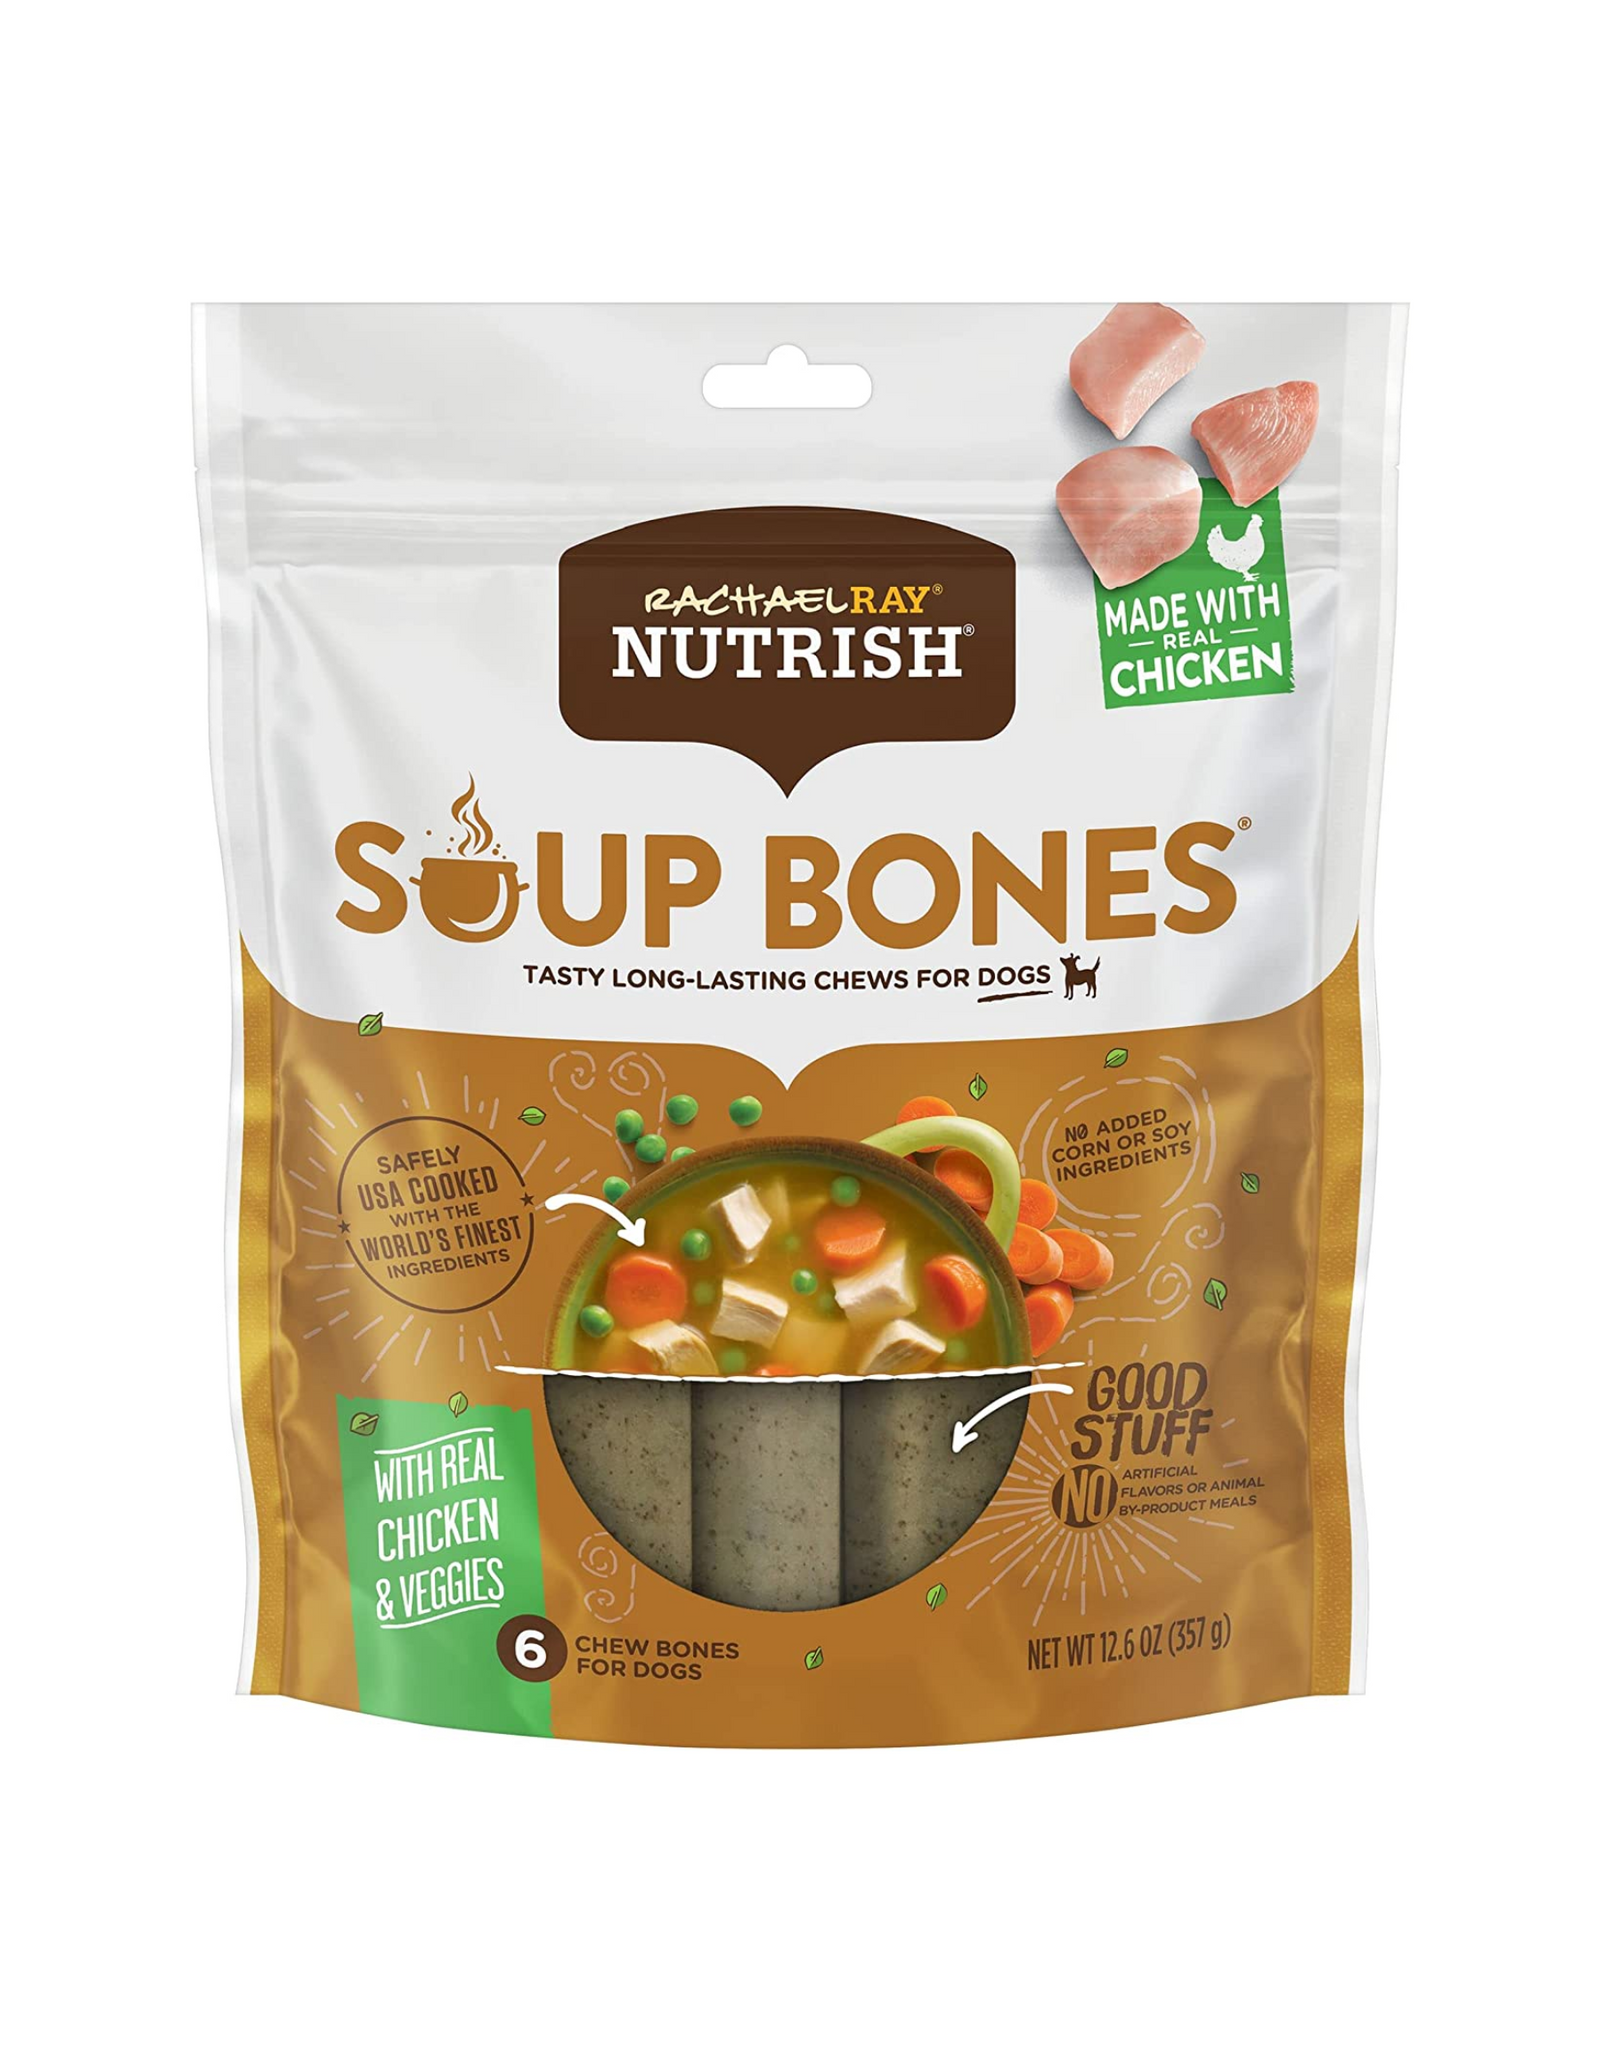 Rachael Ray Nutrish Soup Bones Dog Treats, Chicken & Veggies Flavor, 6 Bones for Dogs, Regular, 12.6 Oz